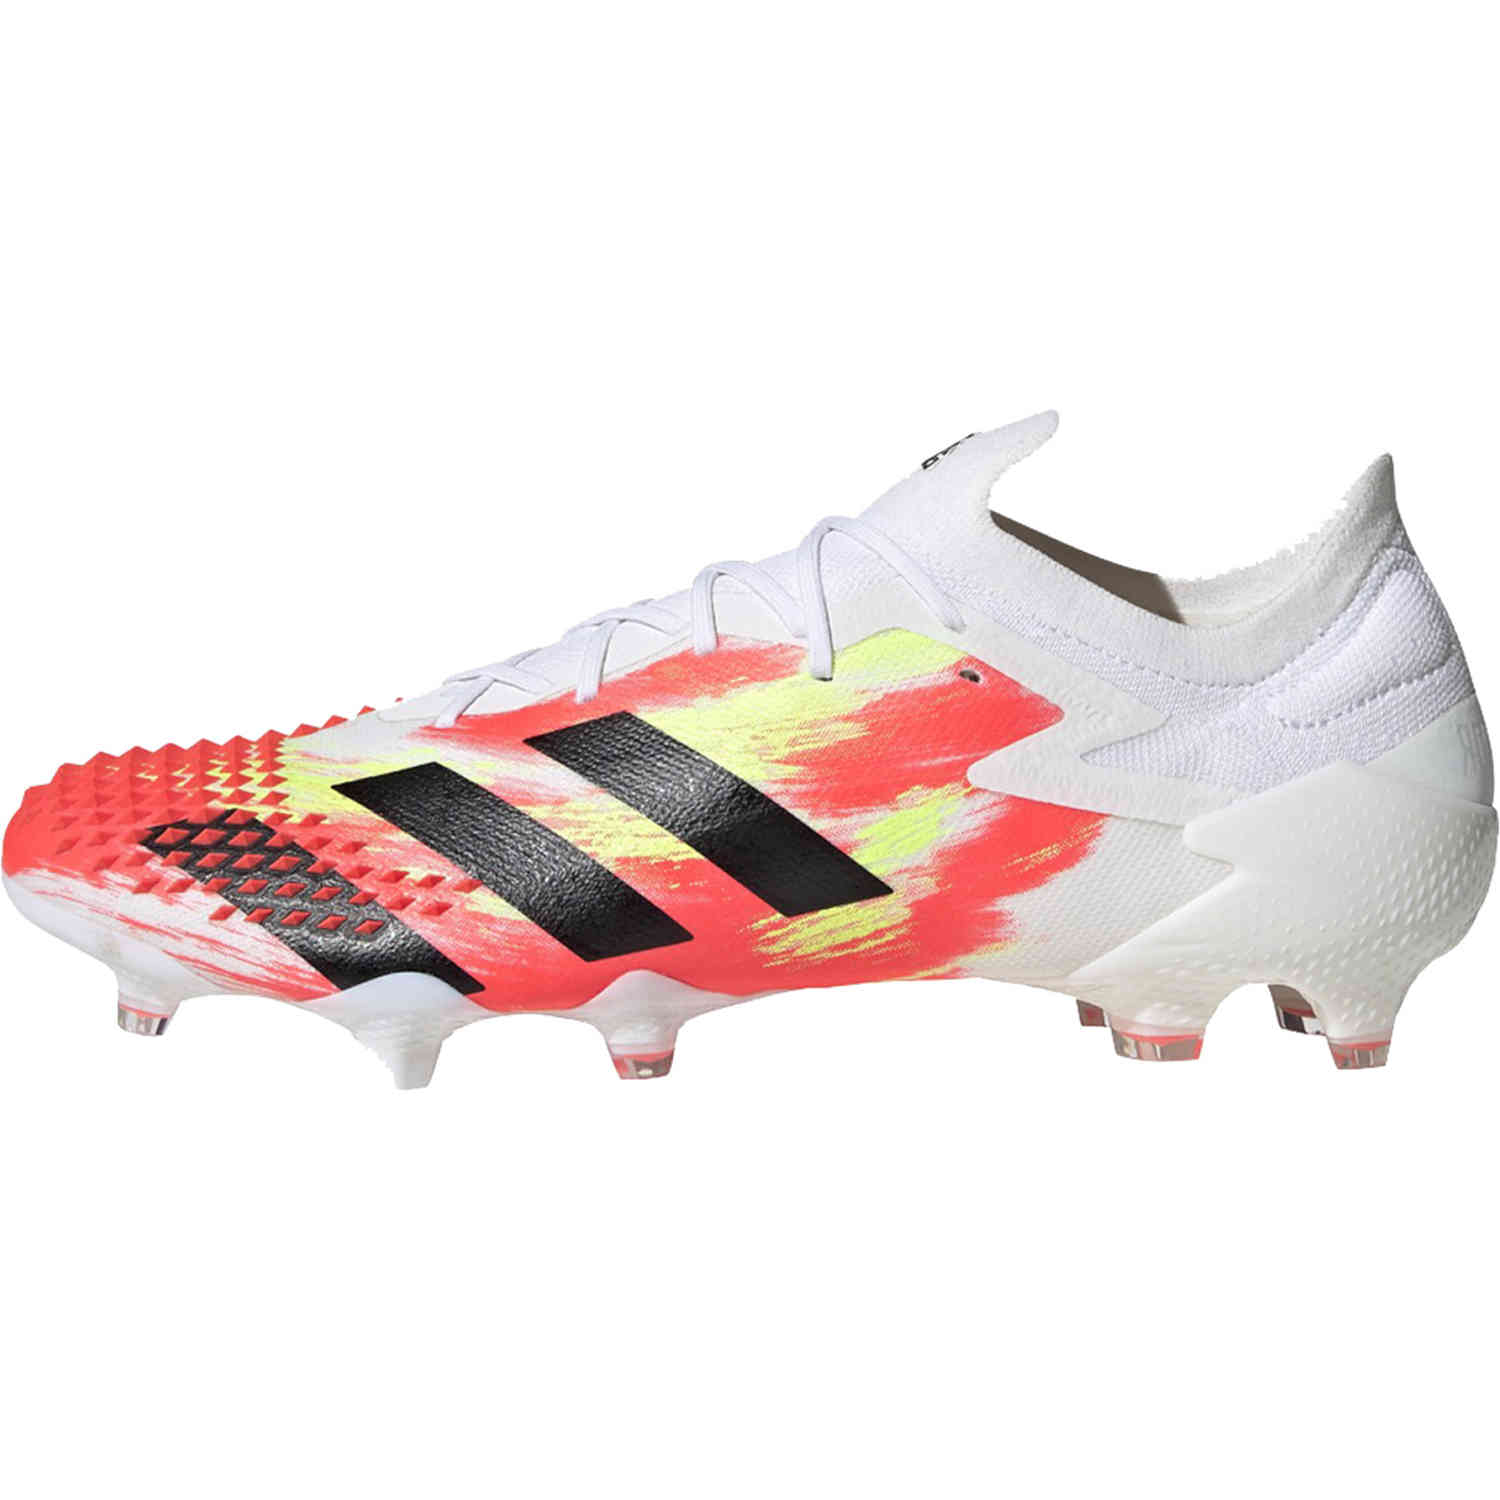 Adidas Predator SportScheck football shoes